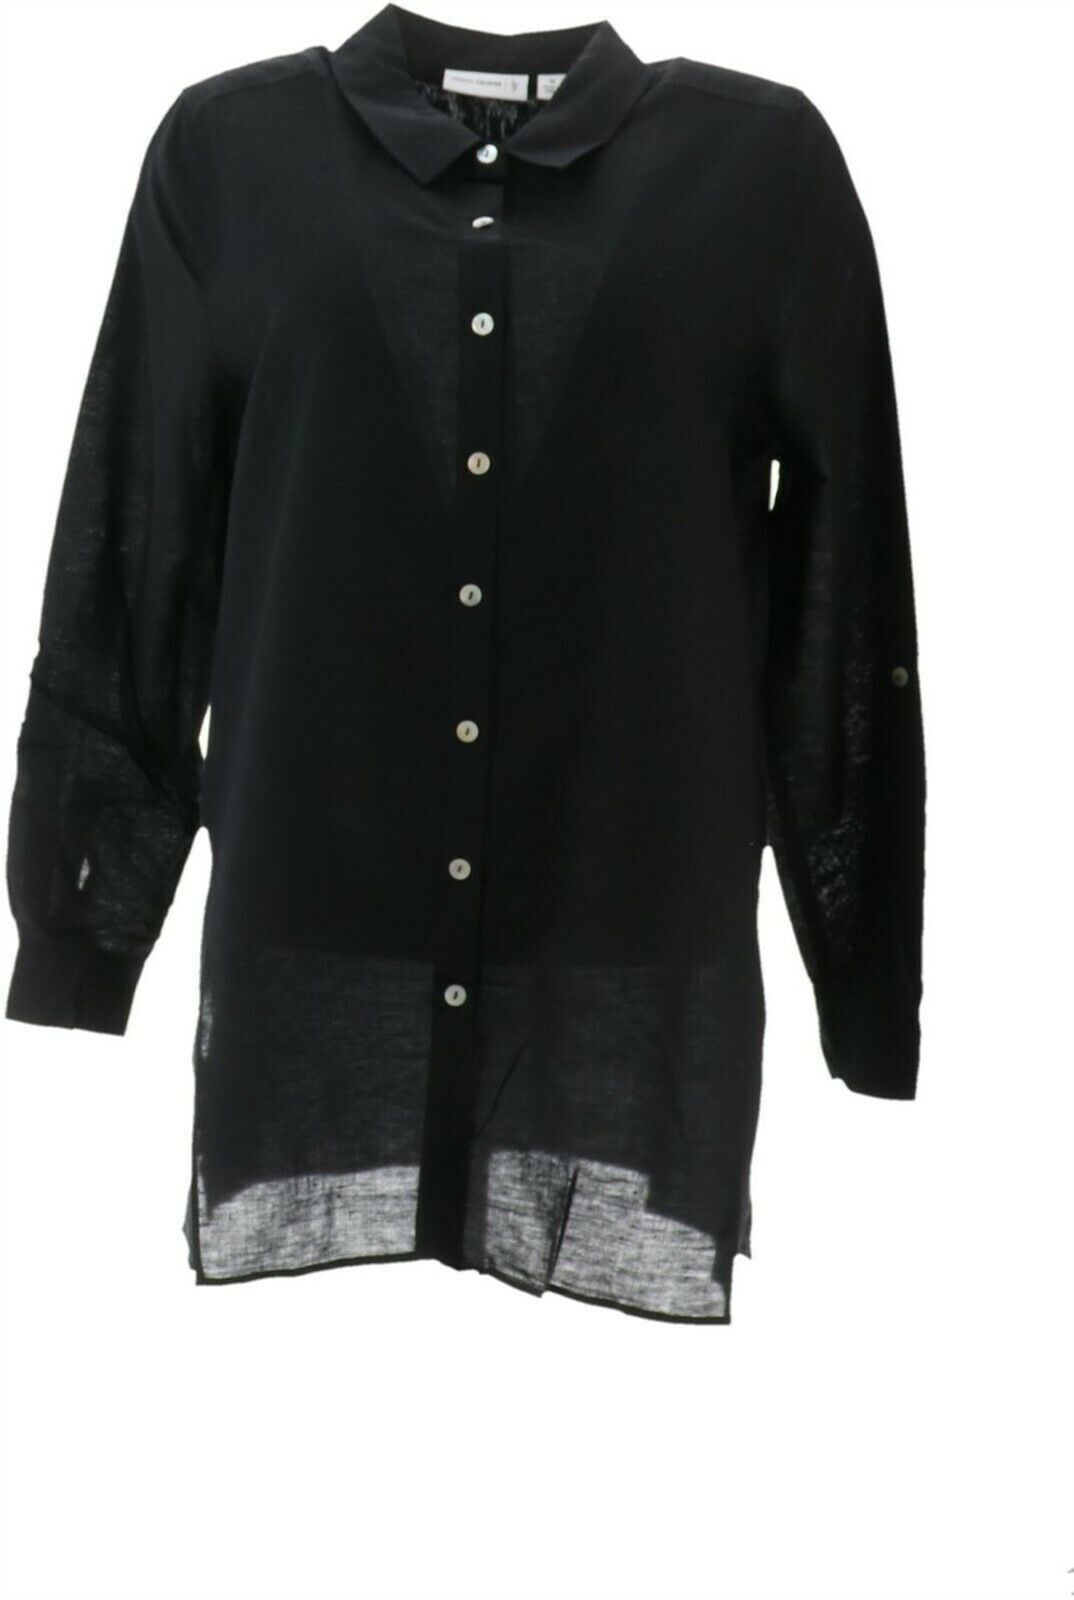 Susan Graver Linen Blend Button Long Slv Shirt Black 6 NEW A265003